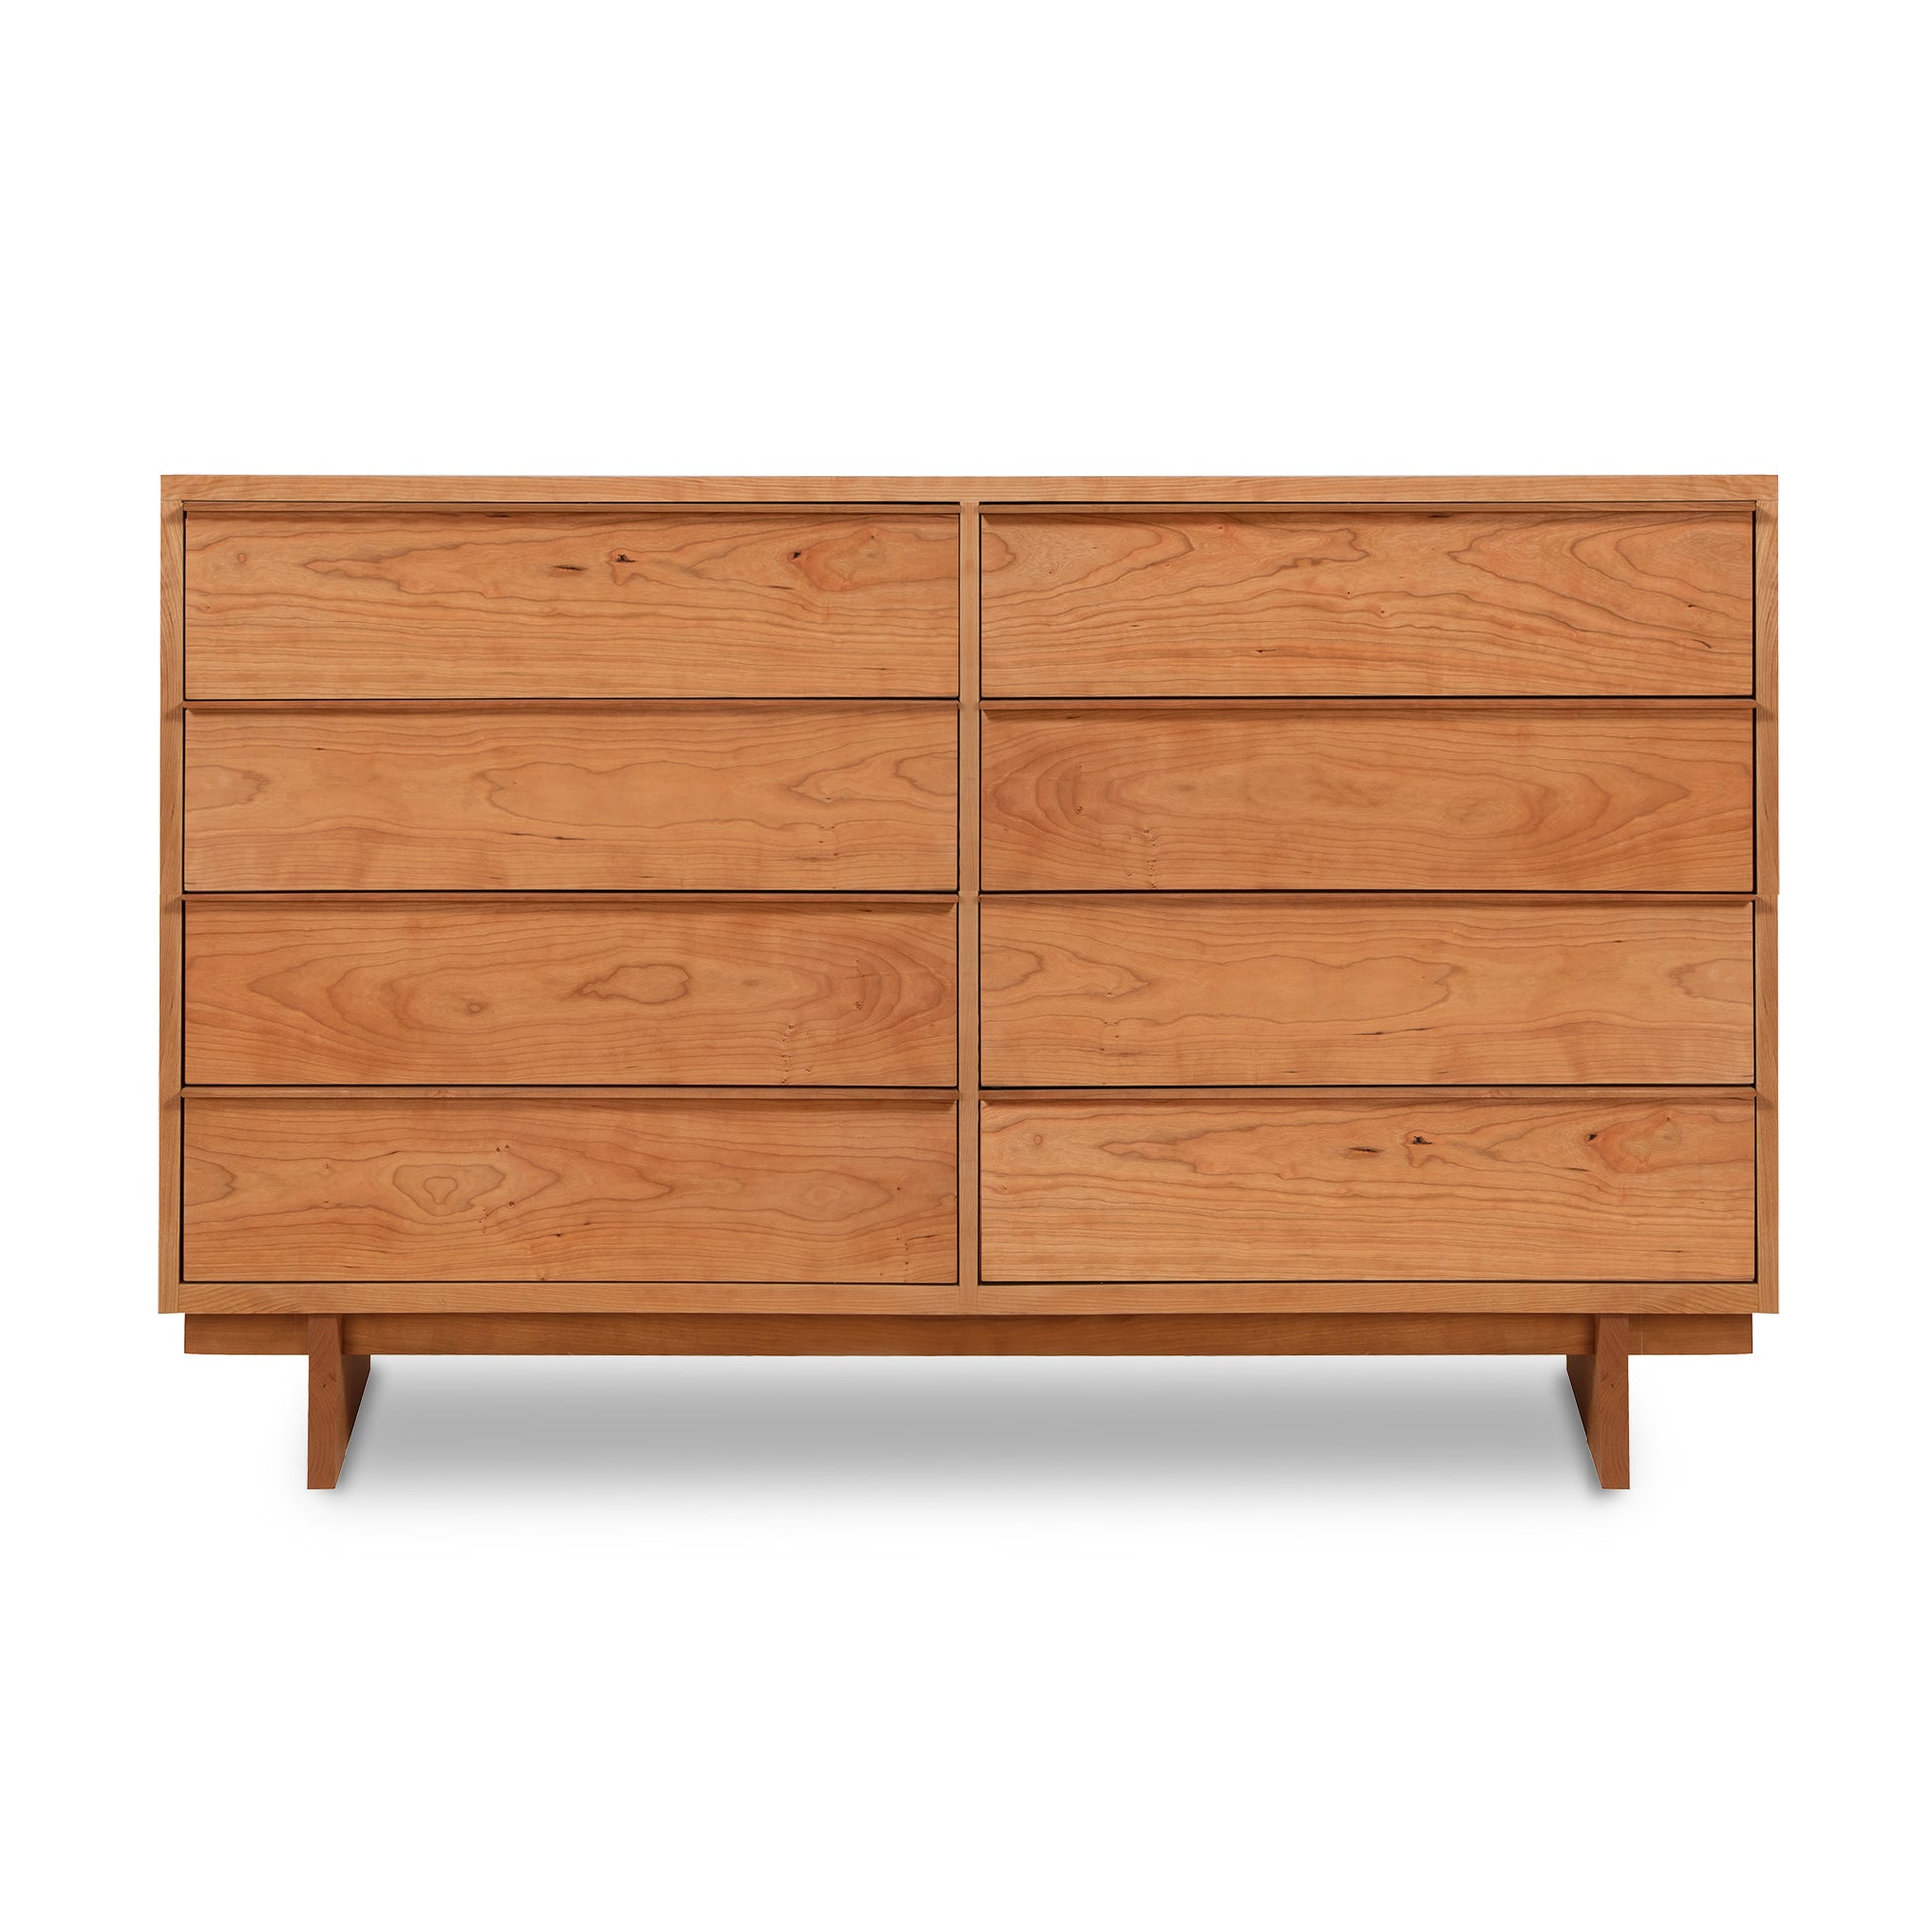 Kipling 8-Drawer Dresser in Cherry hardwood from Vermont Furniture Designs on a white background.